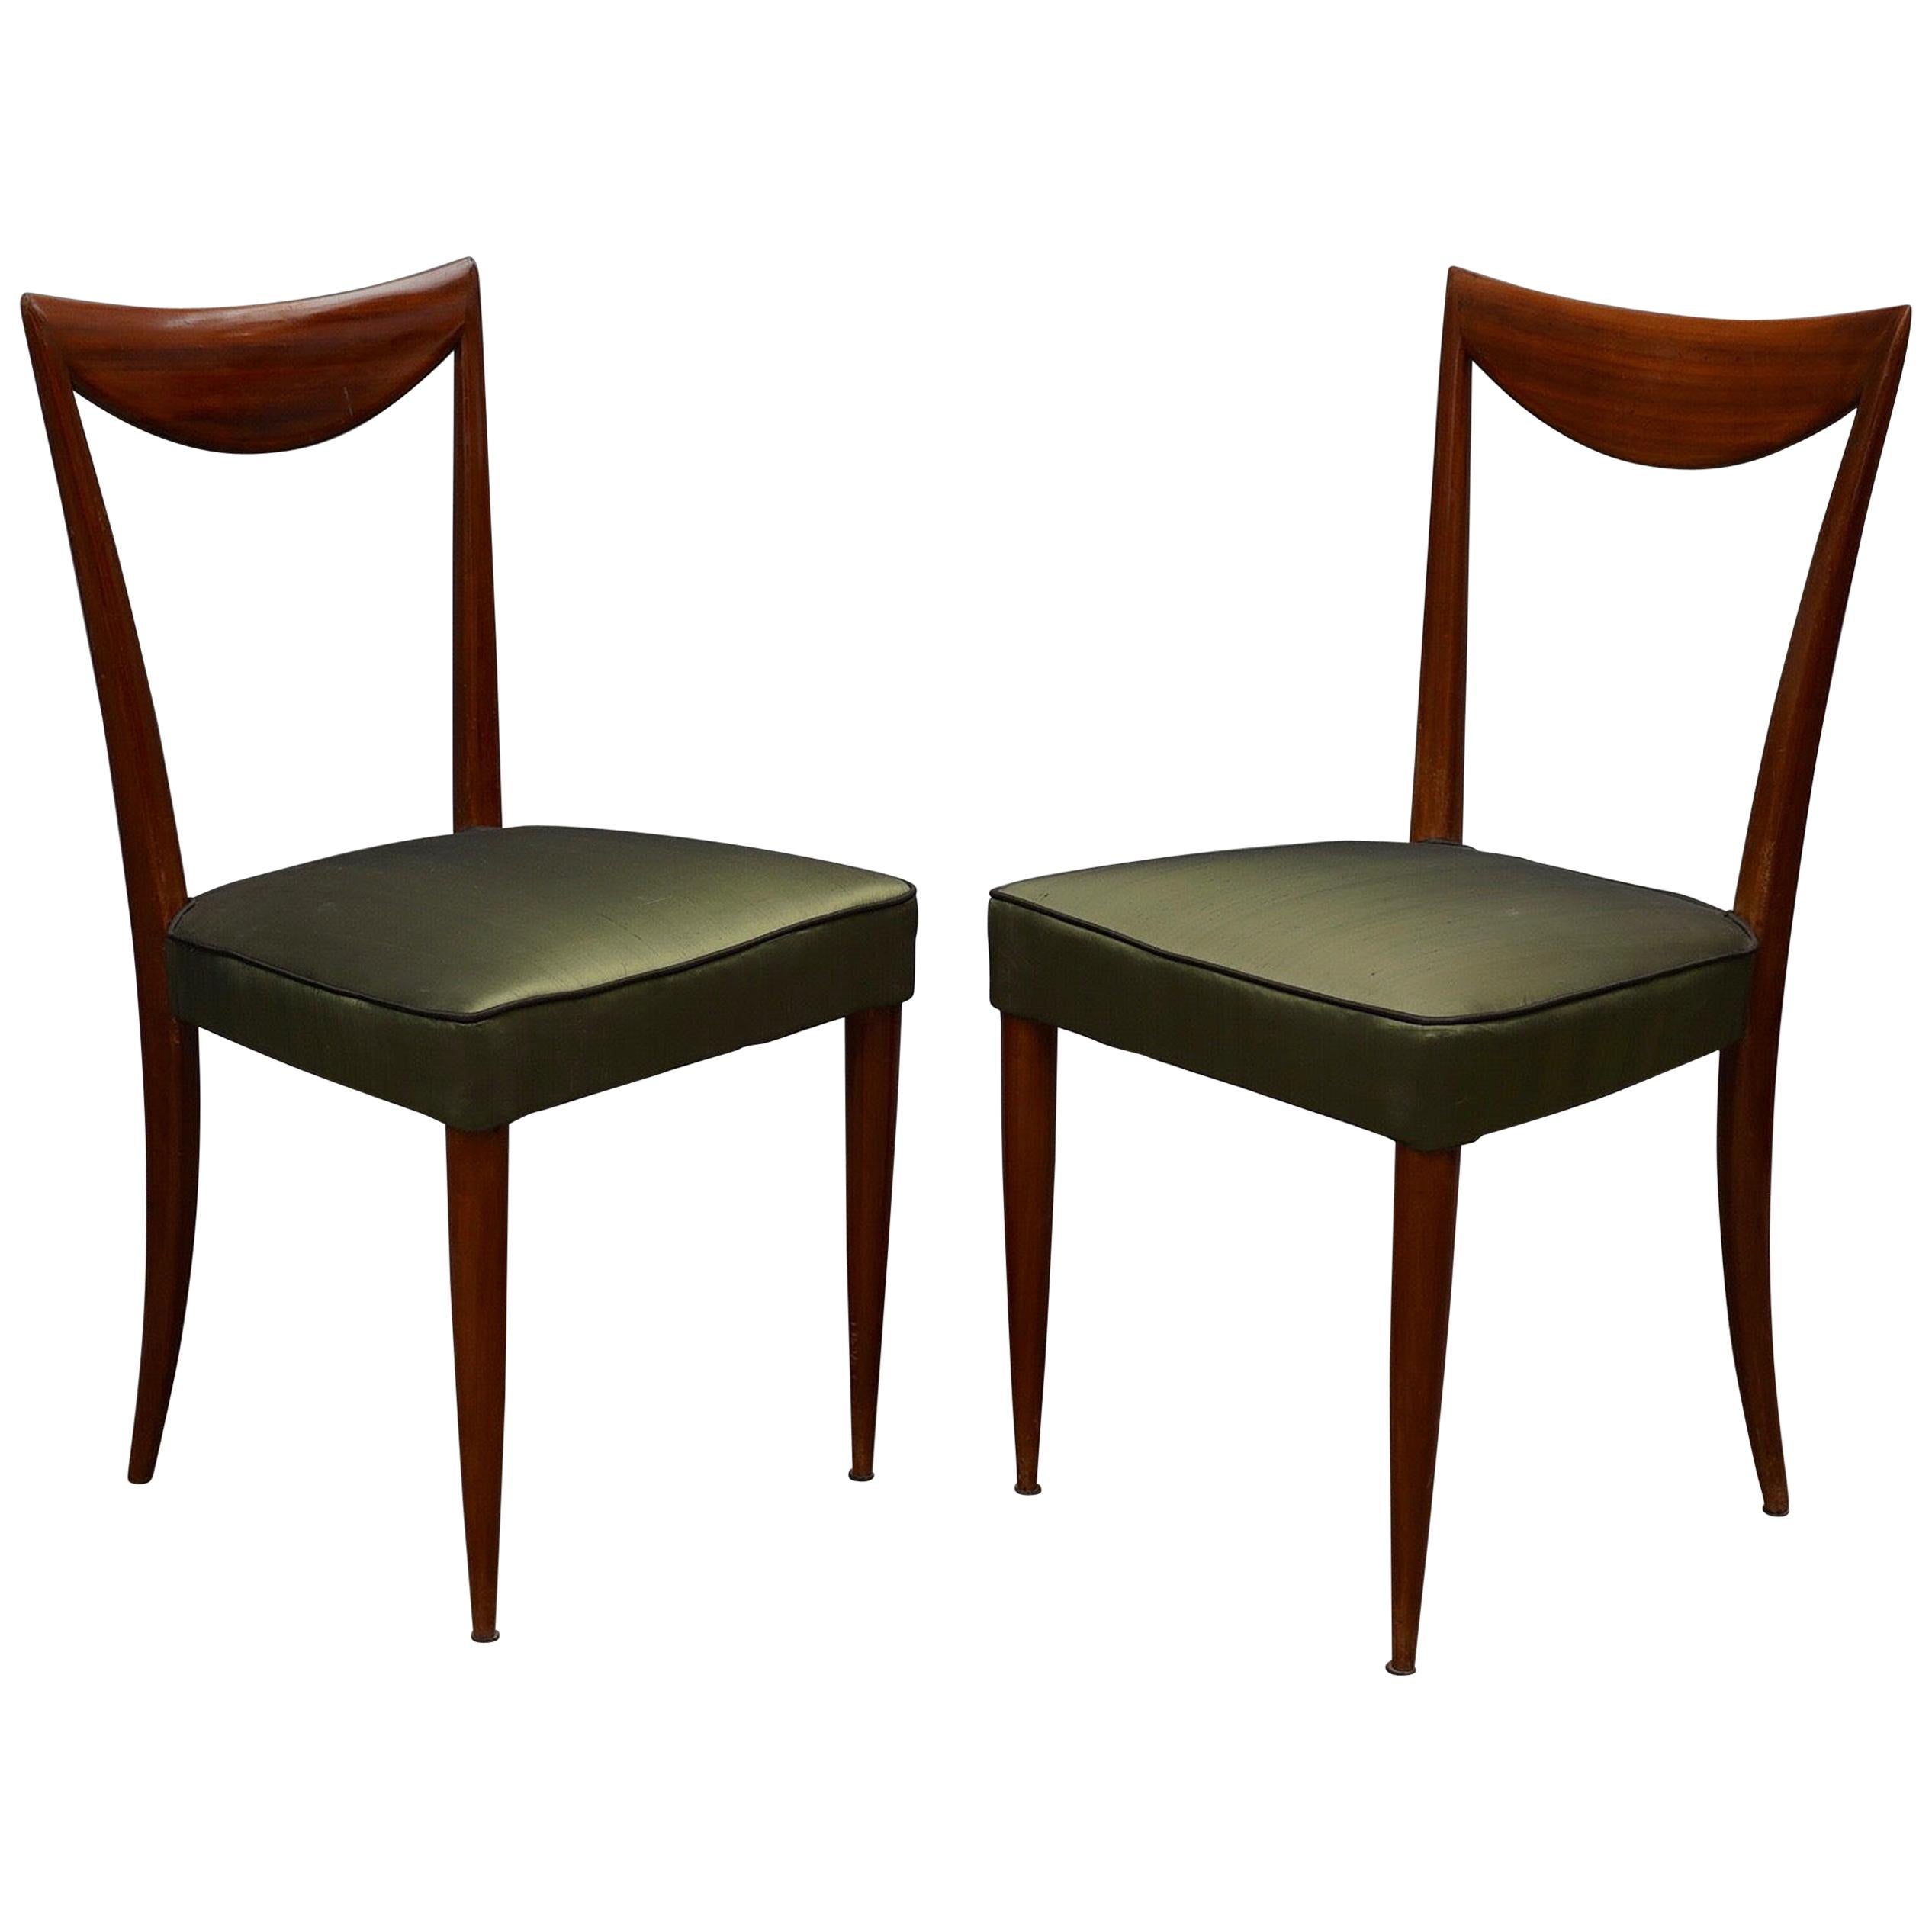 Pair of Mahogany and Green Silk Italian Chairs, 1950